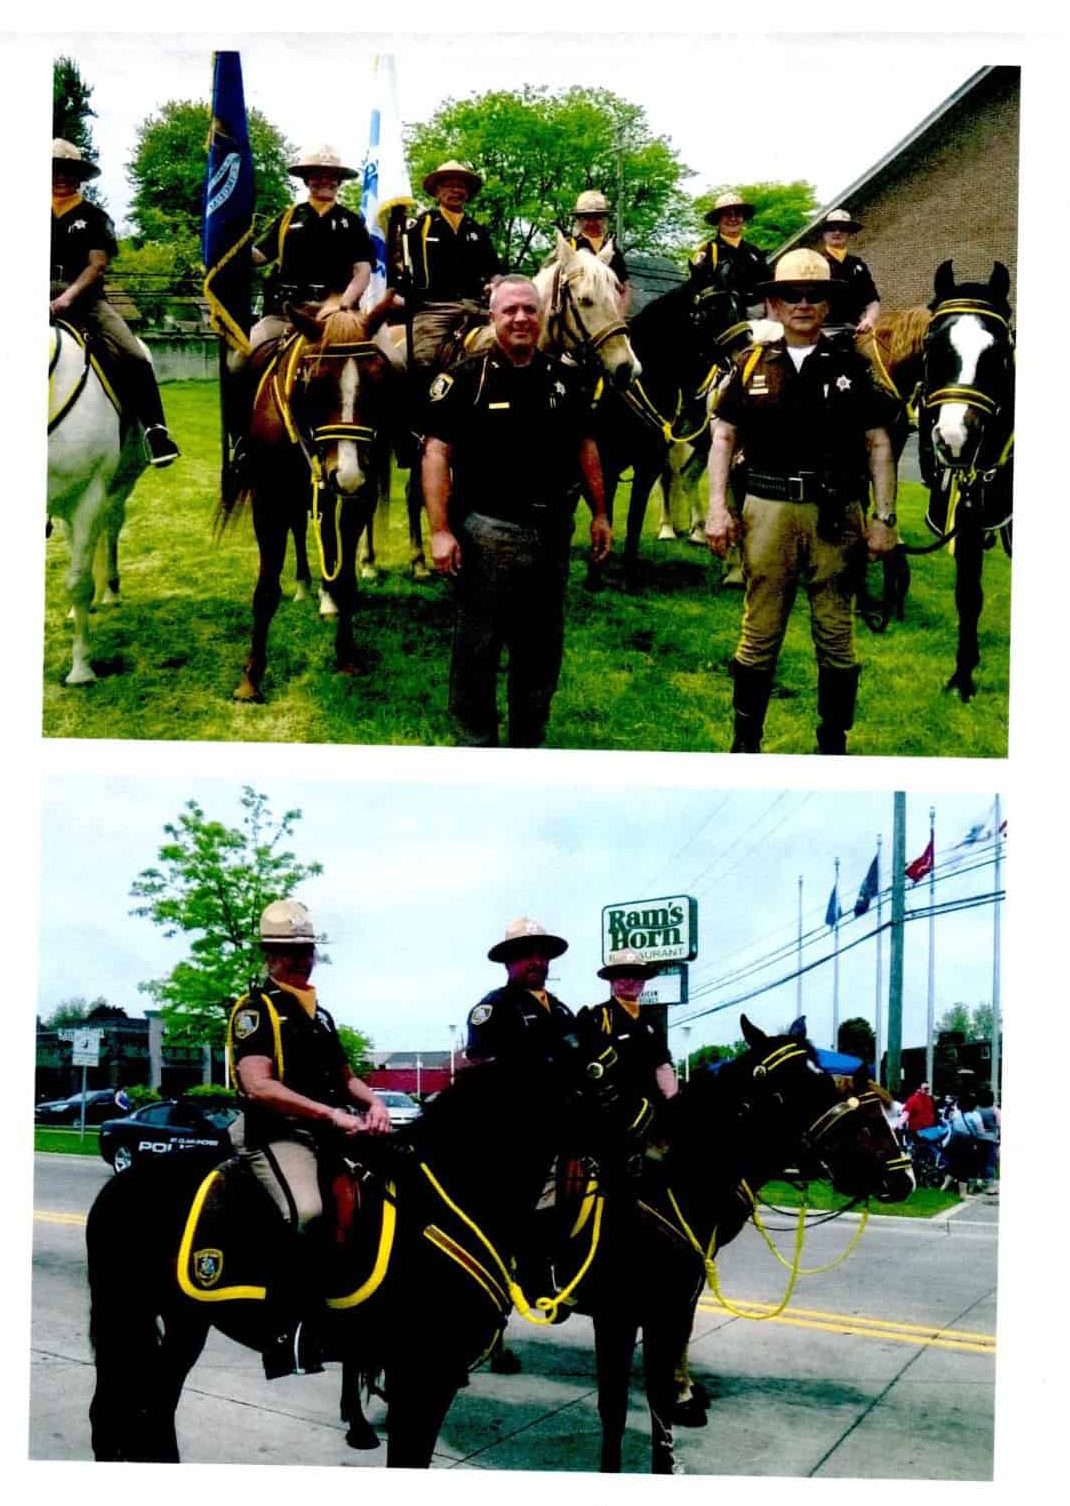 Former Reserve Deputy Al Polkowski in back row on horseback with Macomb County Sheriff Anthony Wickersham